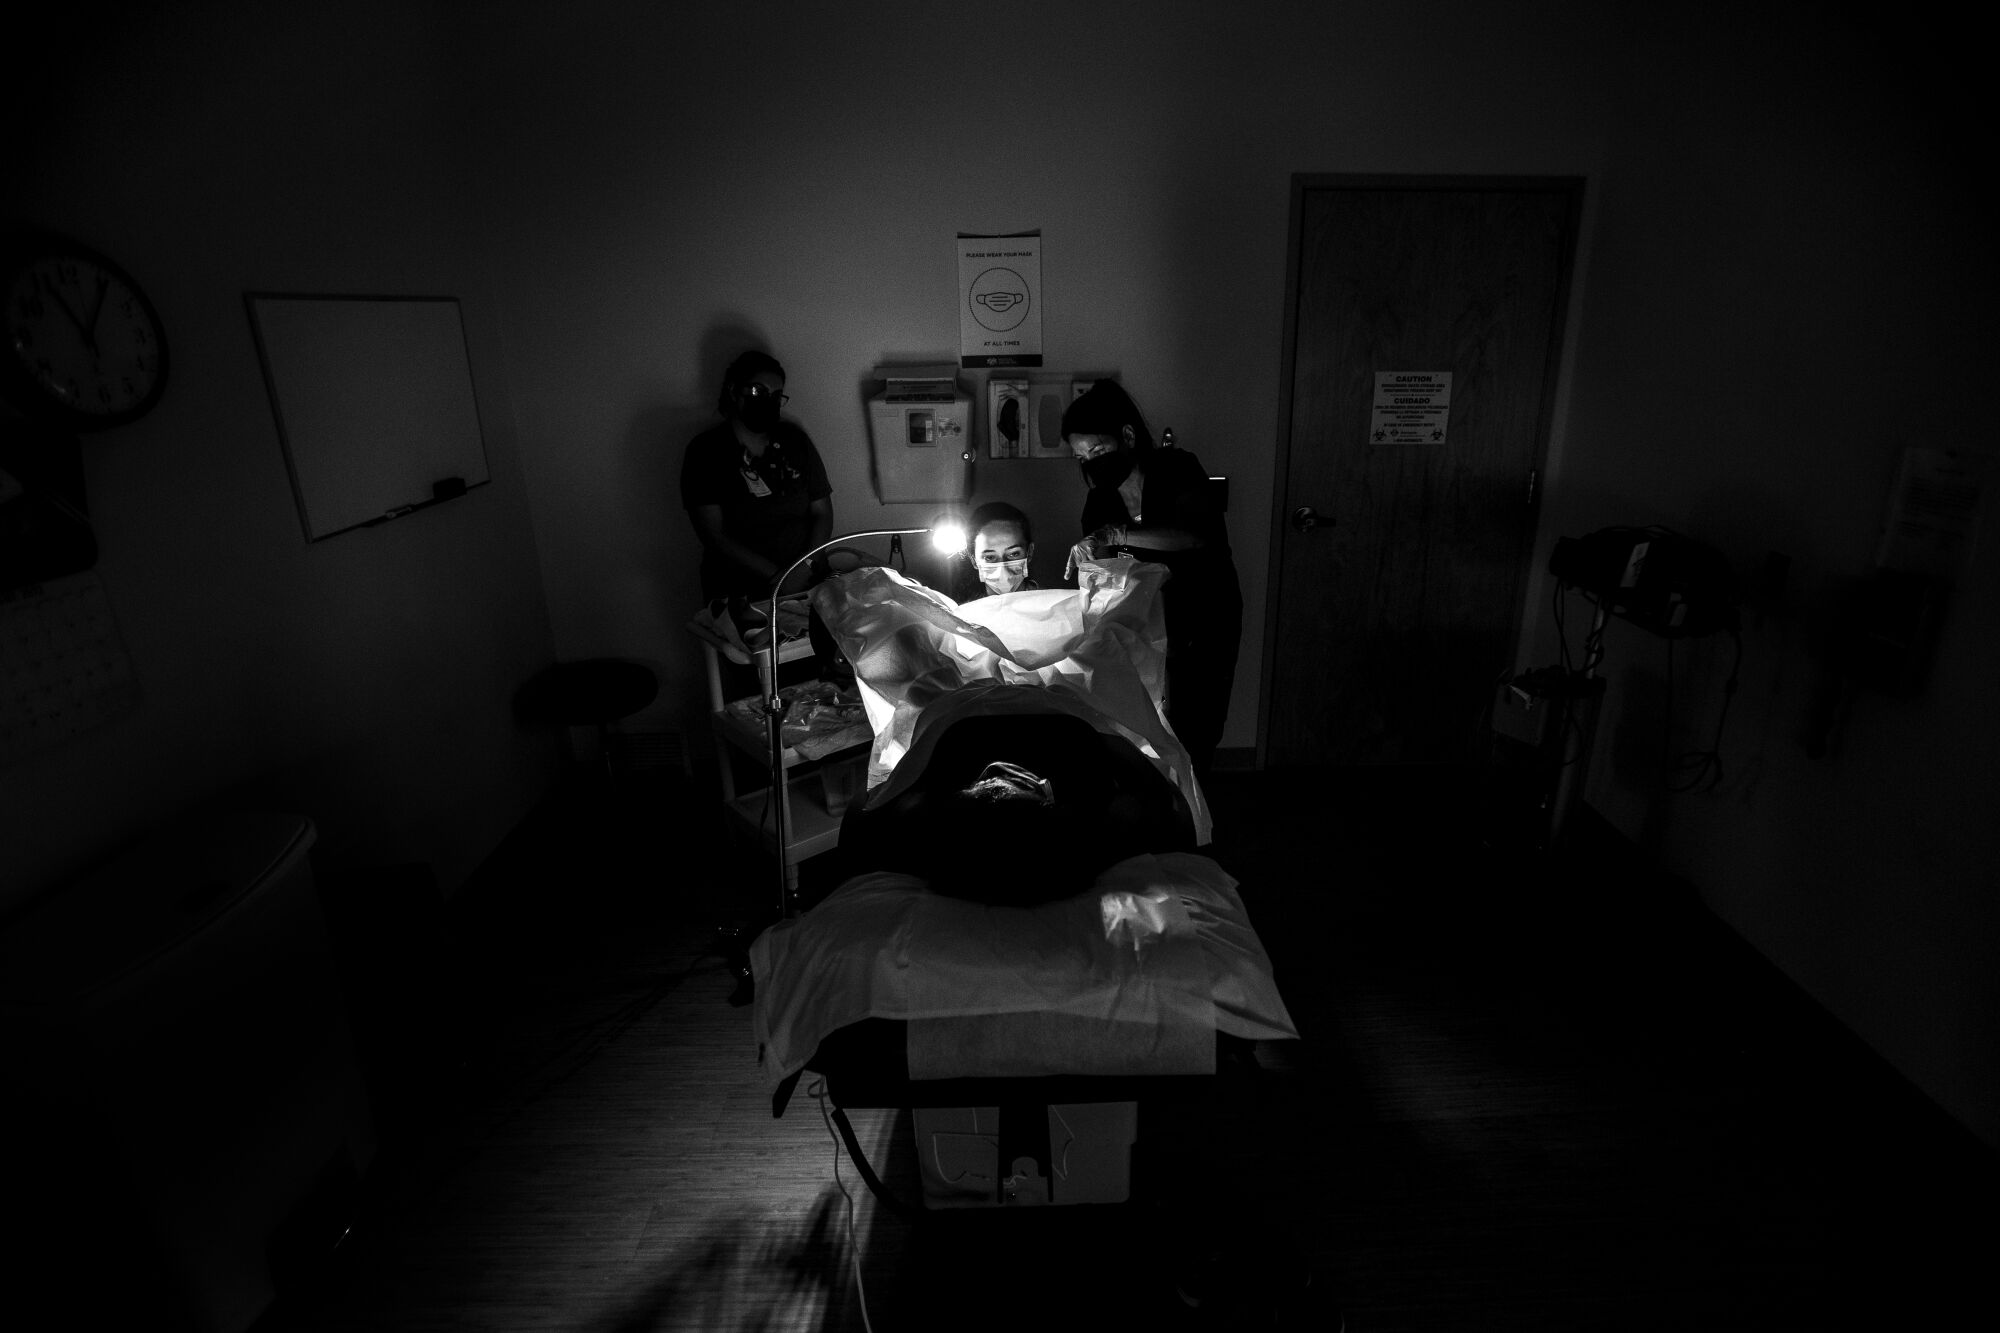 Albuquerque - The exam room is dark on purpose to calm the patient. 